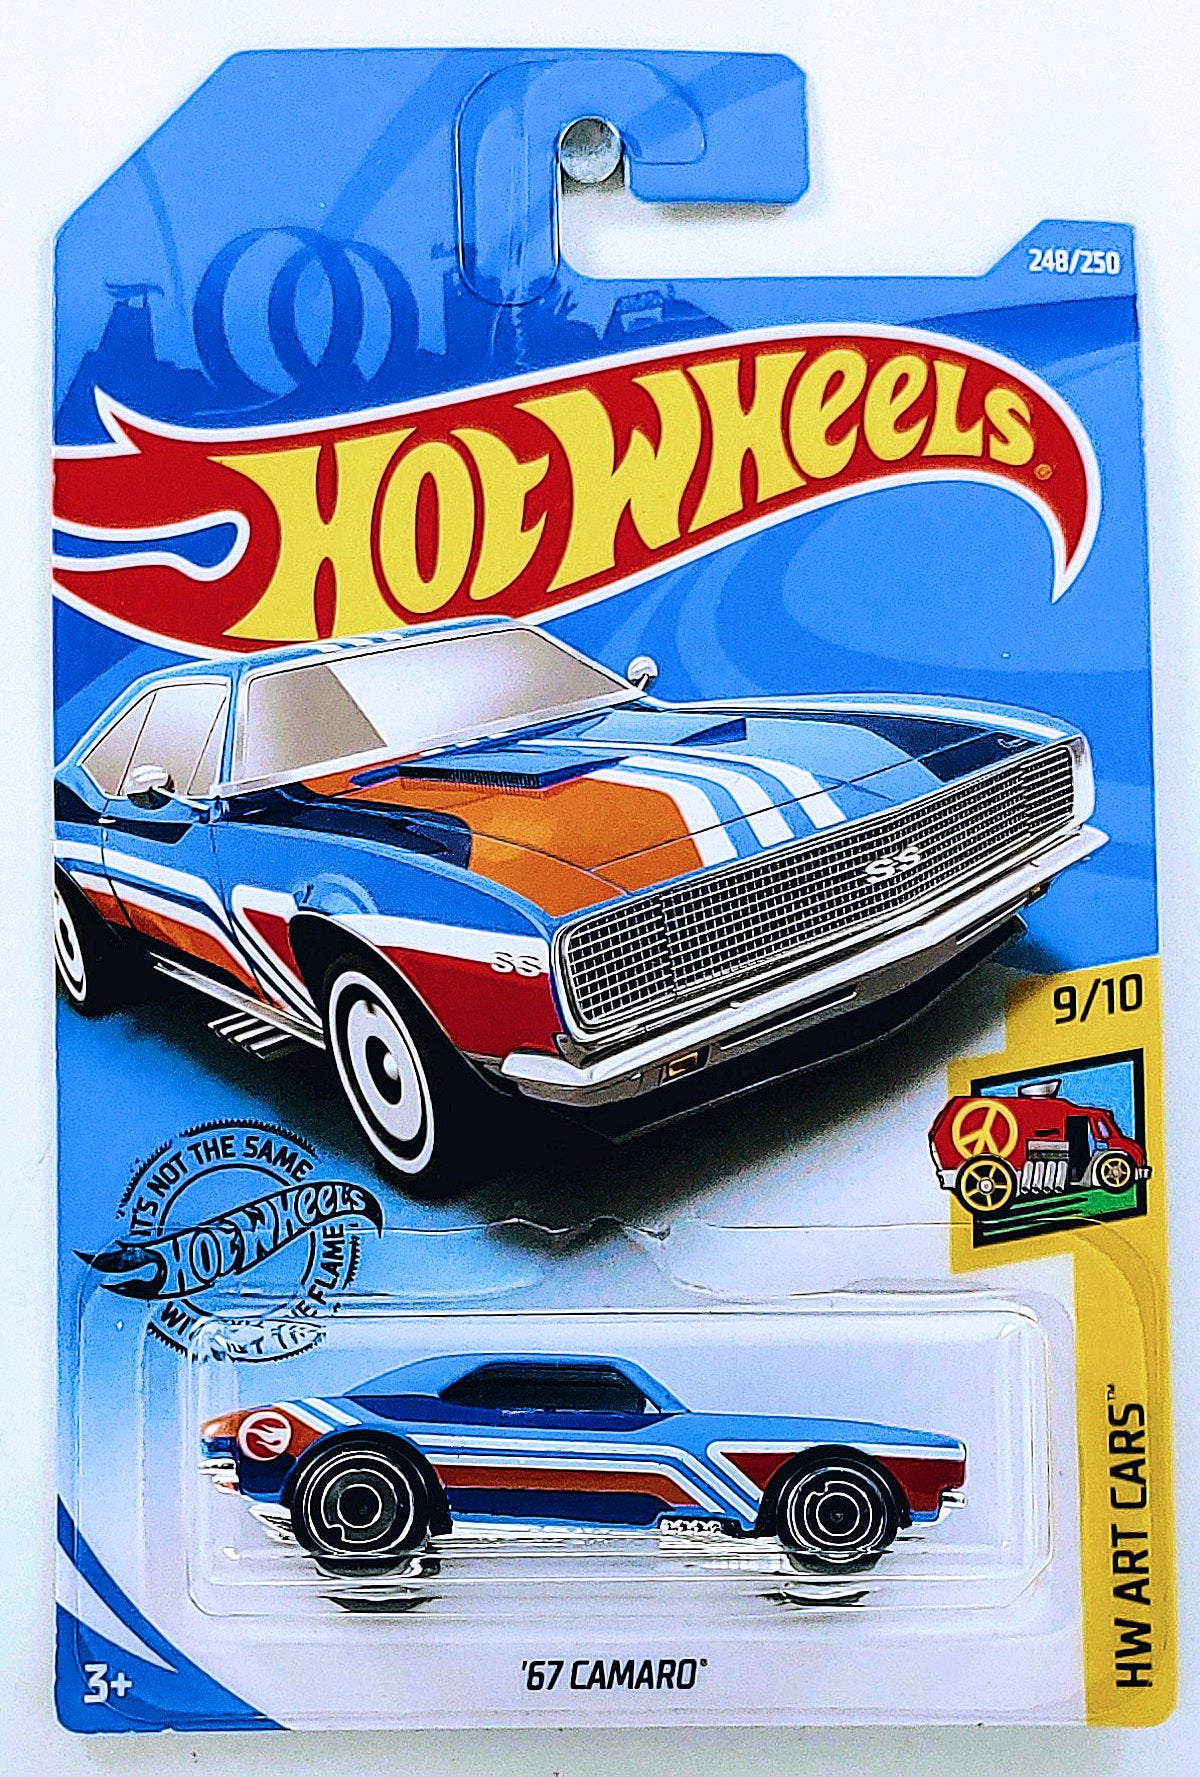 Hot Wheels 2019 - Collector # 248/250 - HW Art Cars 9/10 - Treasure Hunts - '67 Camaro - Blue - IC